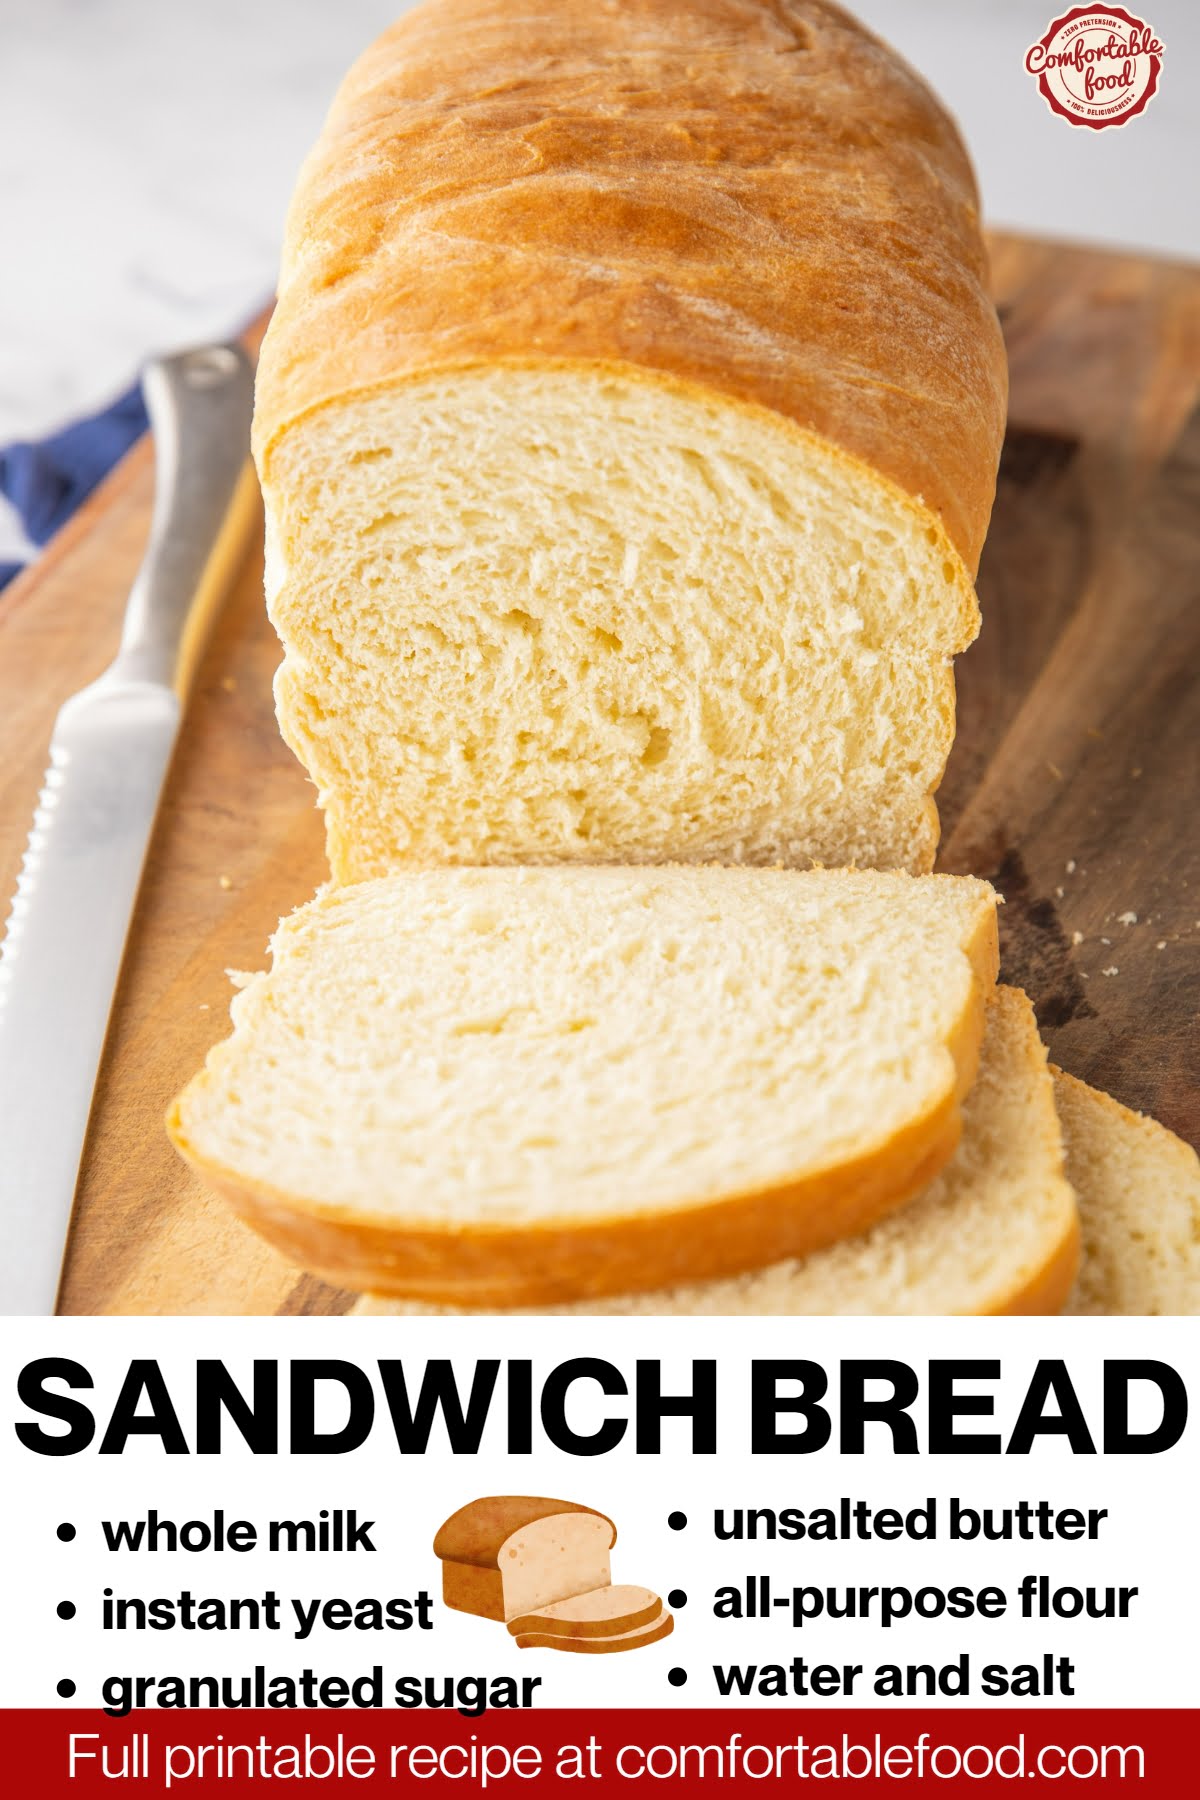 Sandwich bread - socials